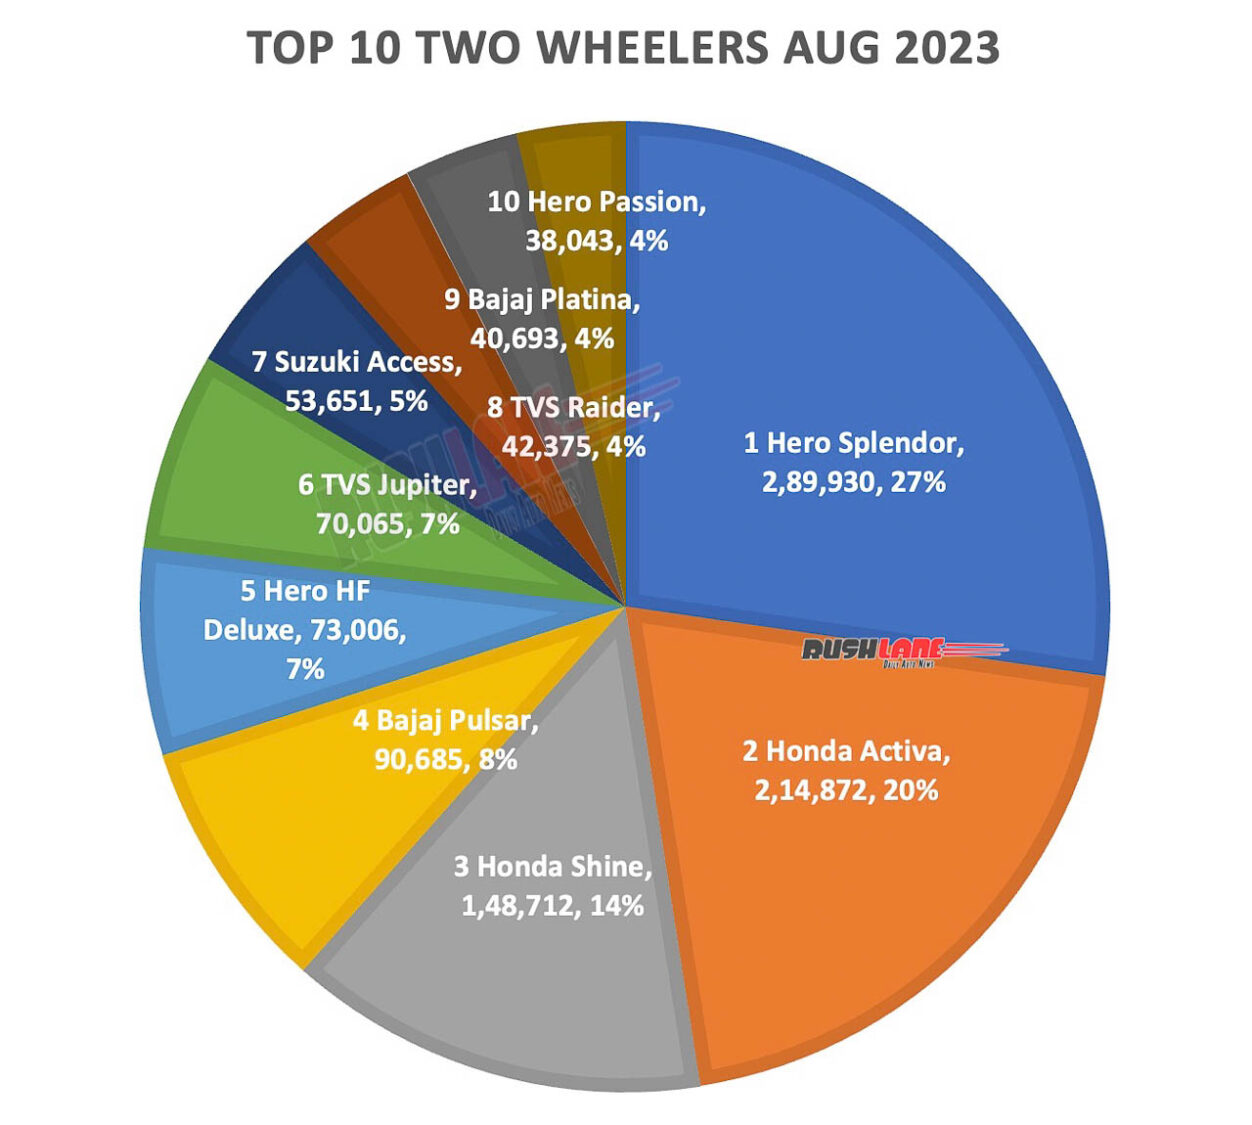 Top 10 Two Wheelers Aug 2023